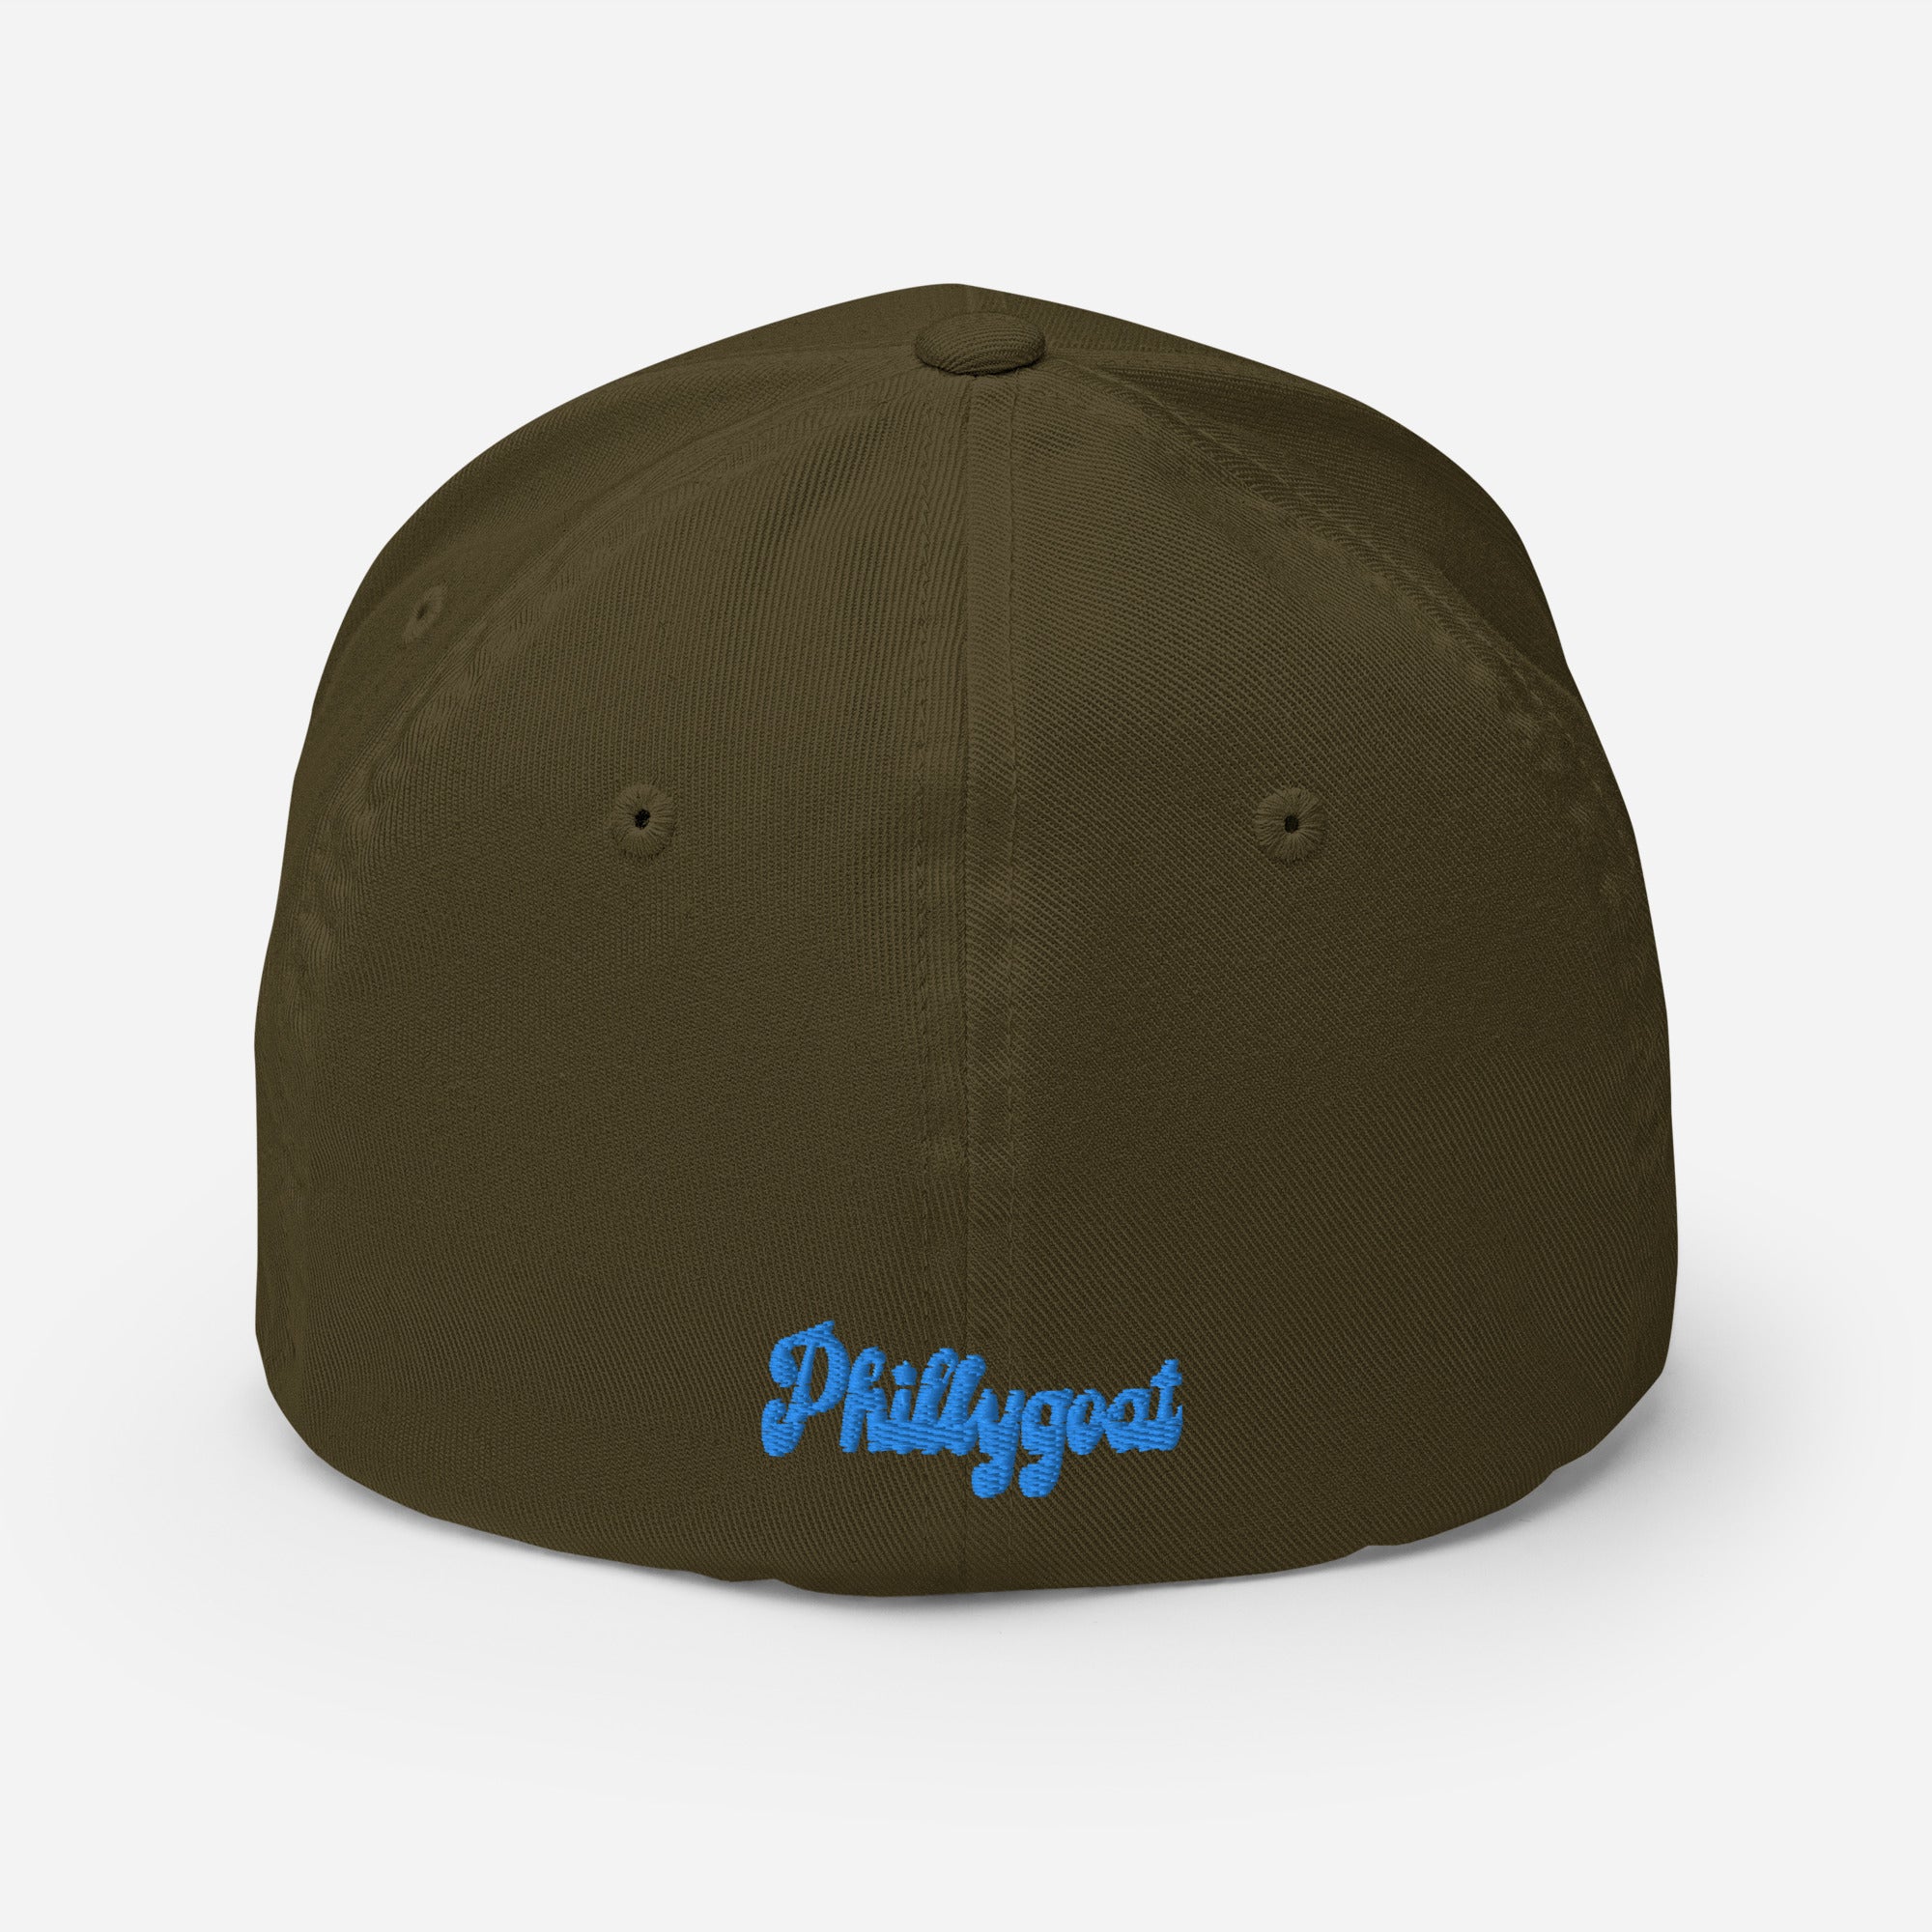 "🐍 Philly Soccer 🐍" Flexfit Hat